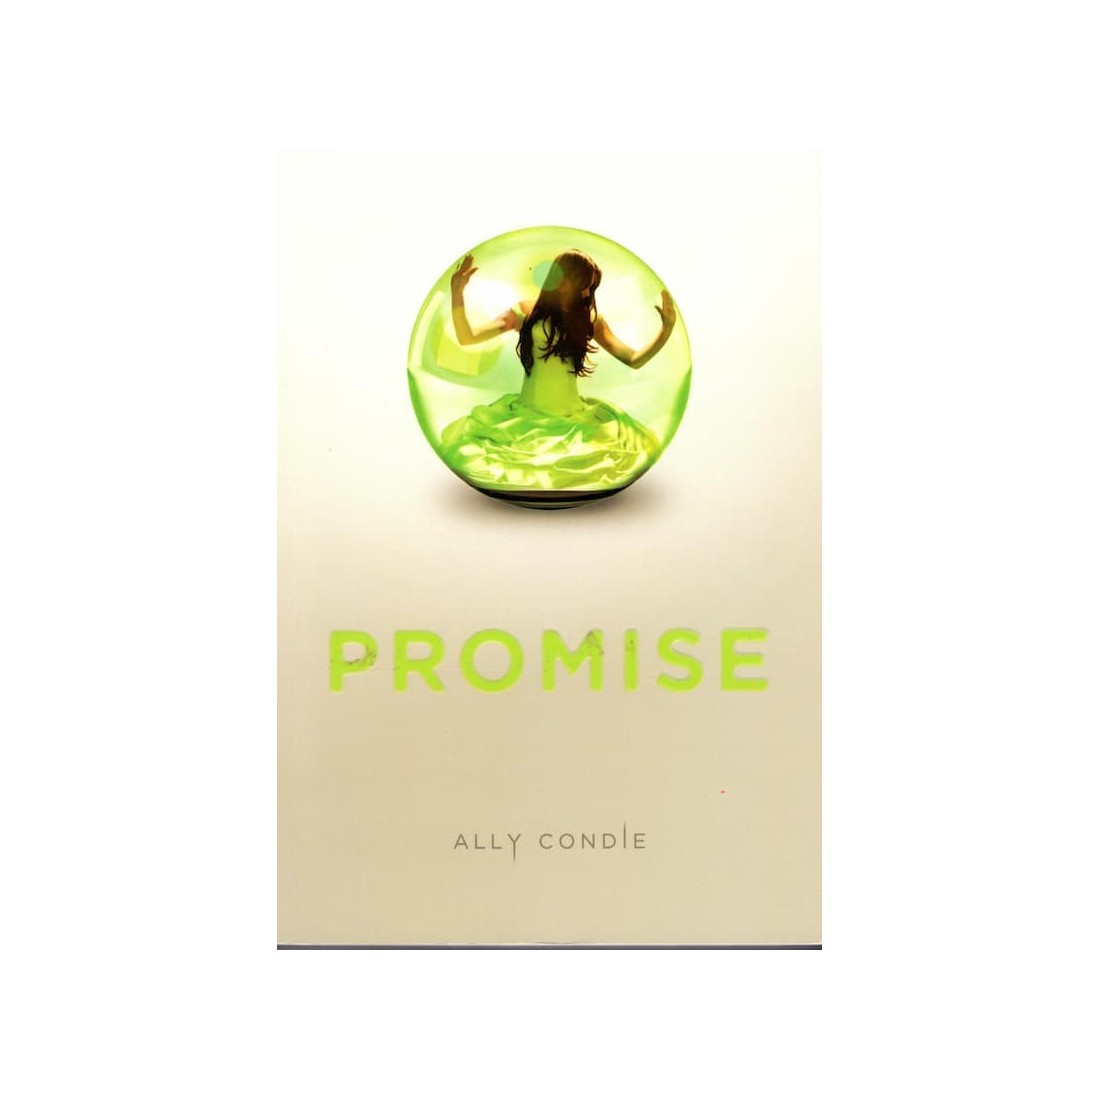 Promise - Roman de Ally Condie - Ocazlivres.com